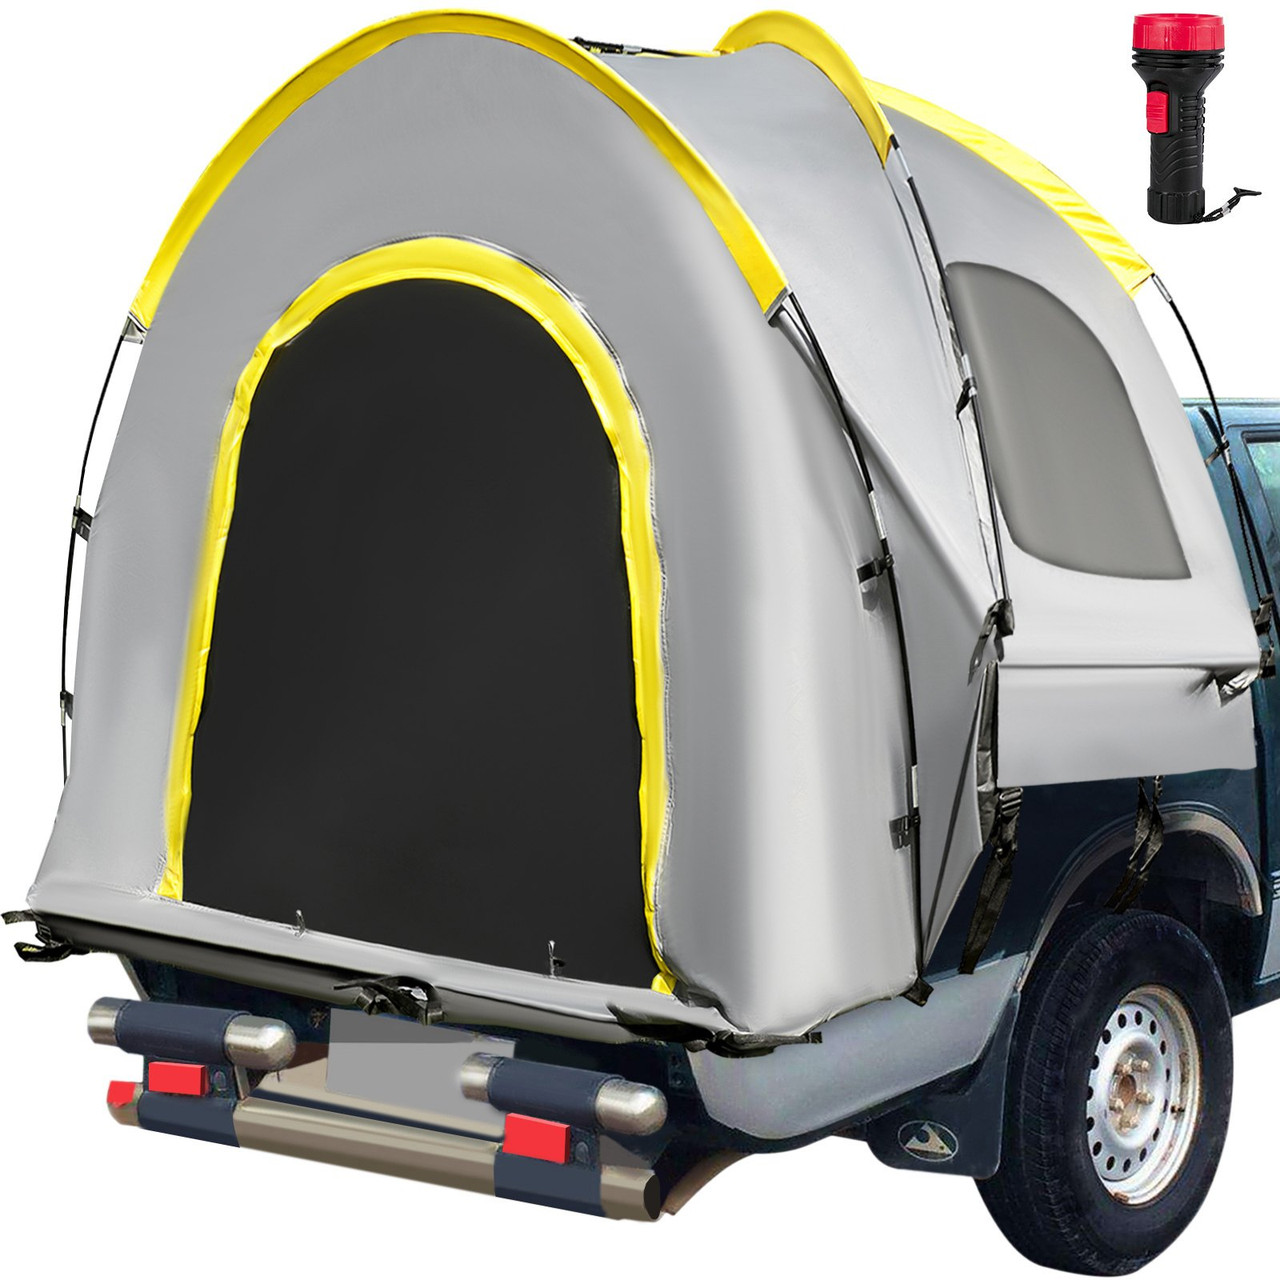 Truck Tent 6 Tall Bed Truck Bed Tent, Pickup Tent for Mid Size Truck, Waterproof Truck Camper, 2-Person Sleeping Capacity, 2 Mesh Windows, Easy To Setup Truck Tents For Camping, Hiking (100-88959)